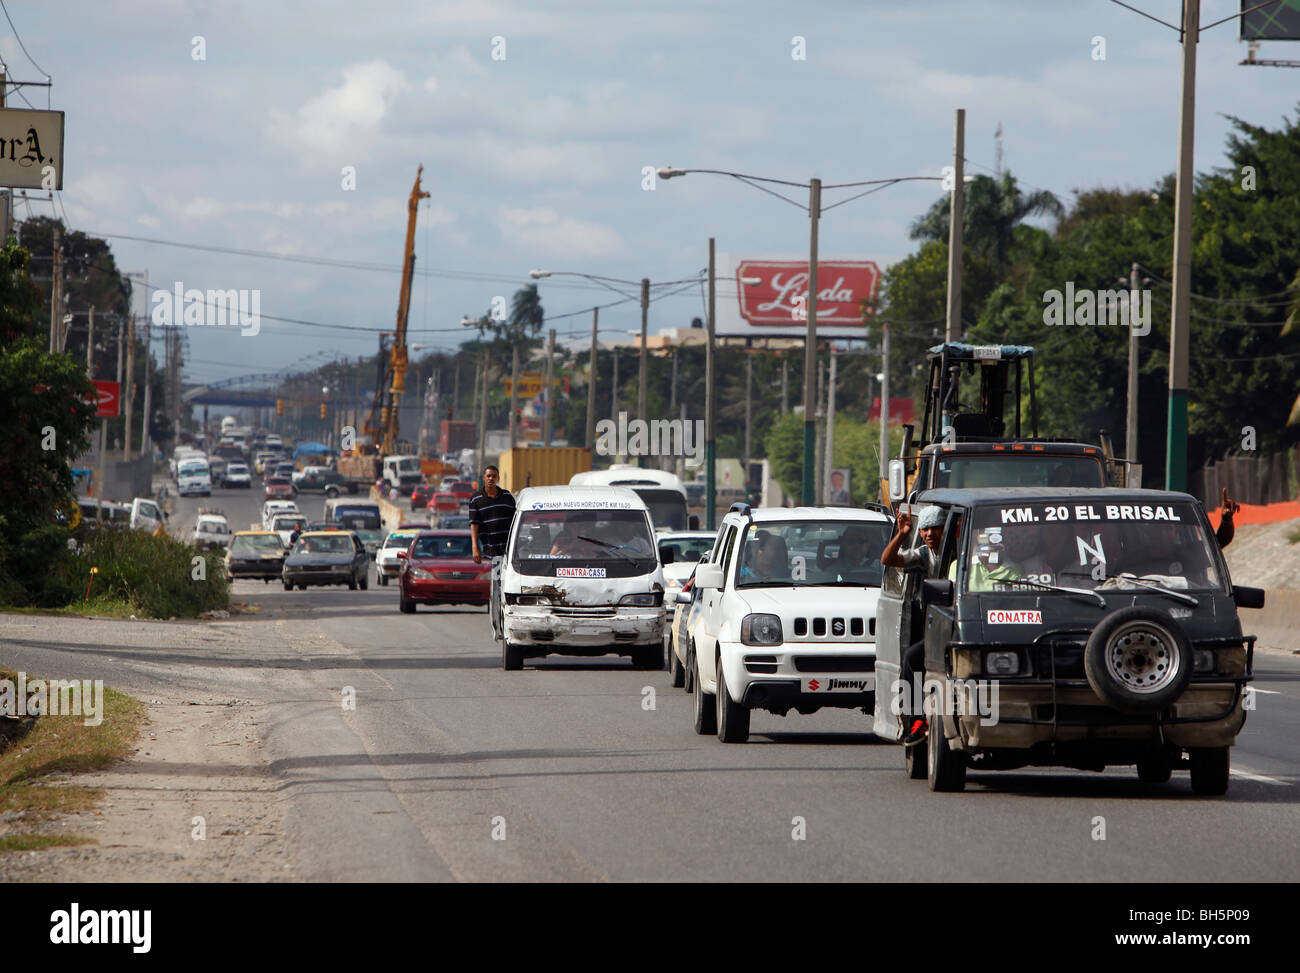 Driving Downtown - Los Montones 2019 - Sajoma - Dominican Republic 